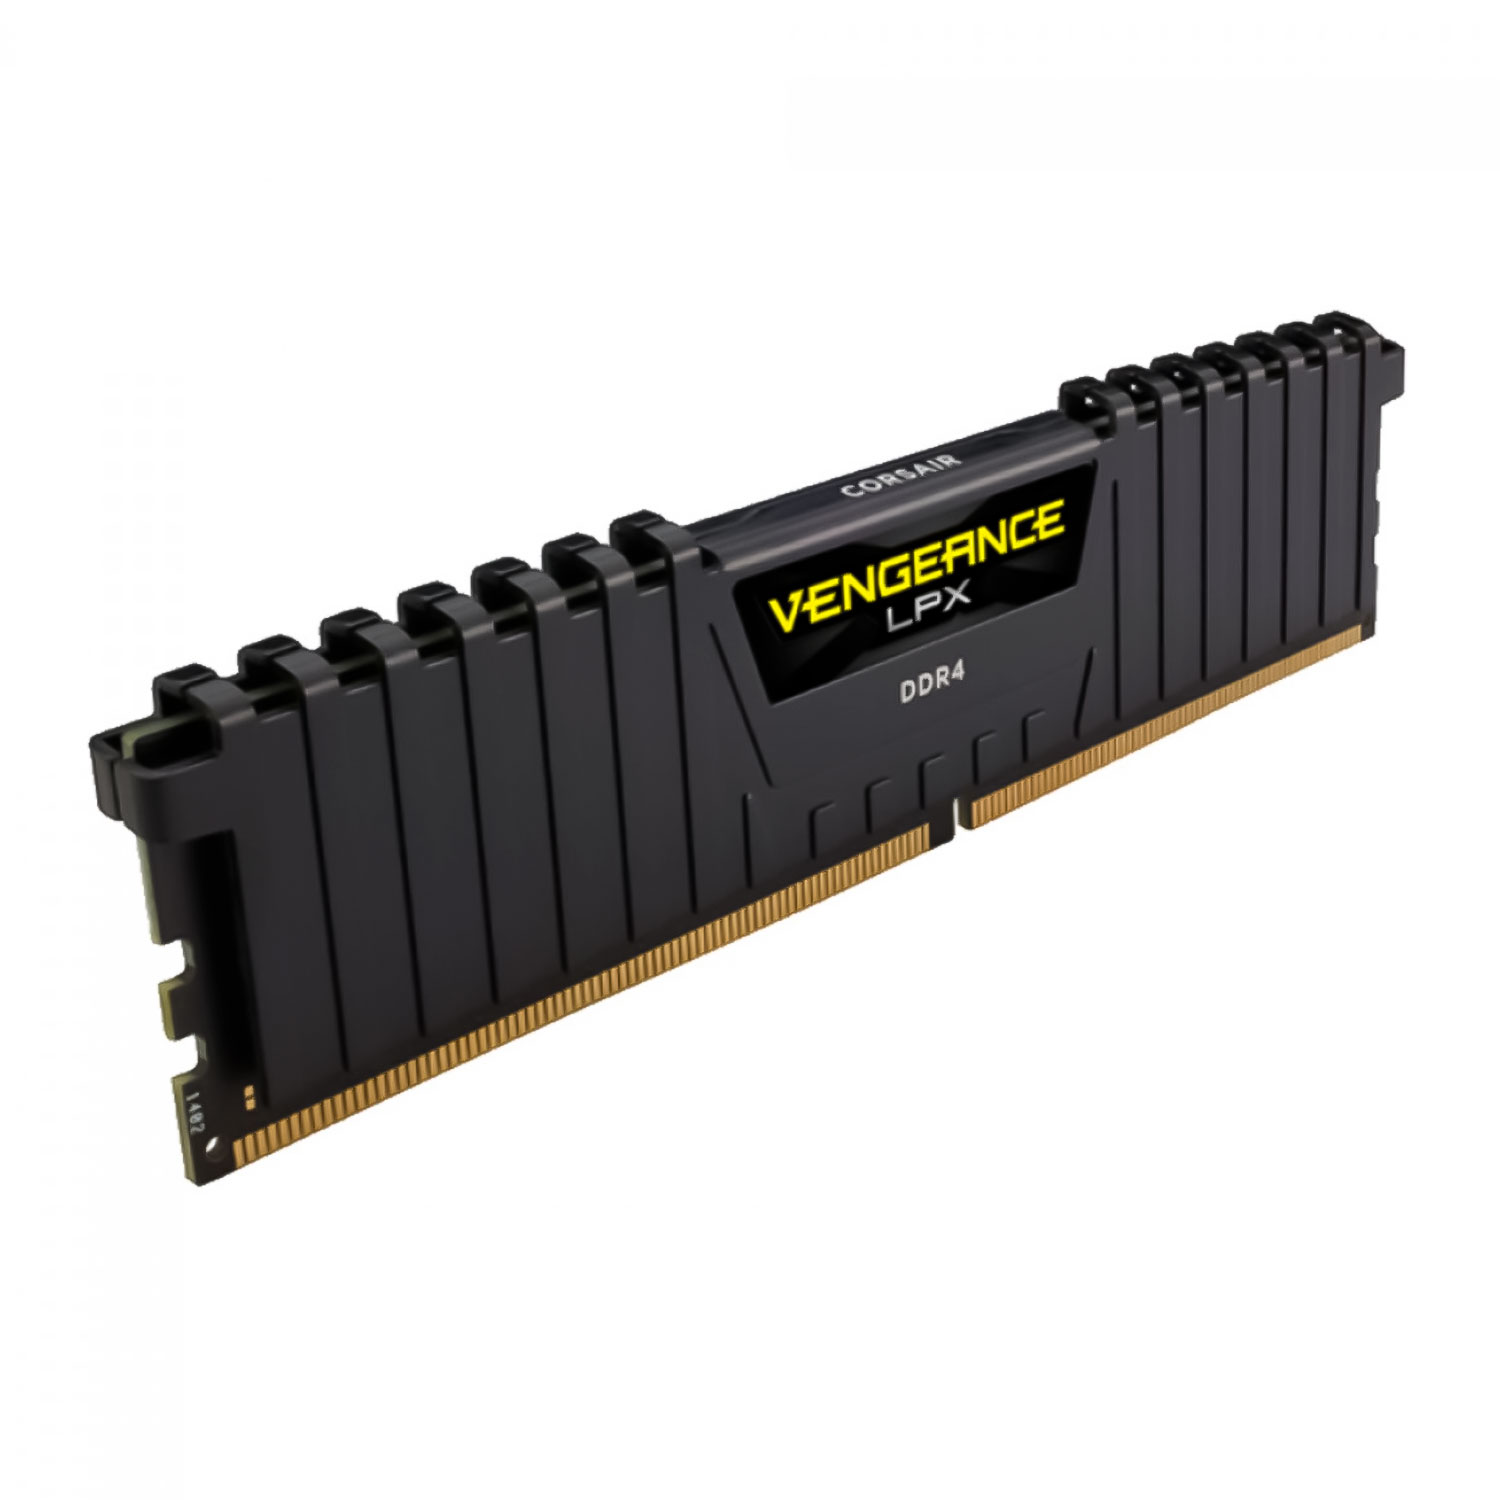 Memória RAM Corsair Vengeance LPX 16GB (2x8GB) DDR4 3200MHz - CMK16GX4M2B3200C16